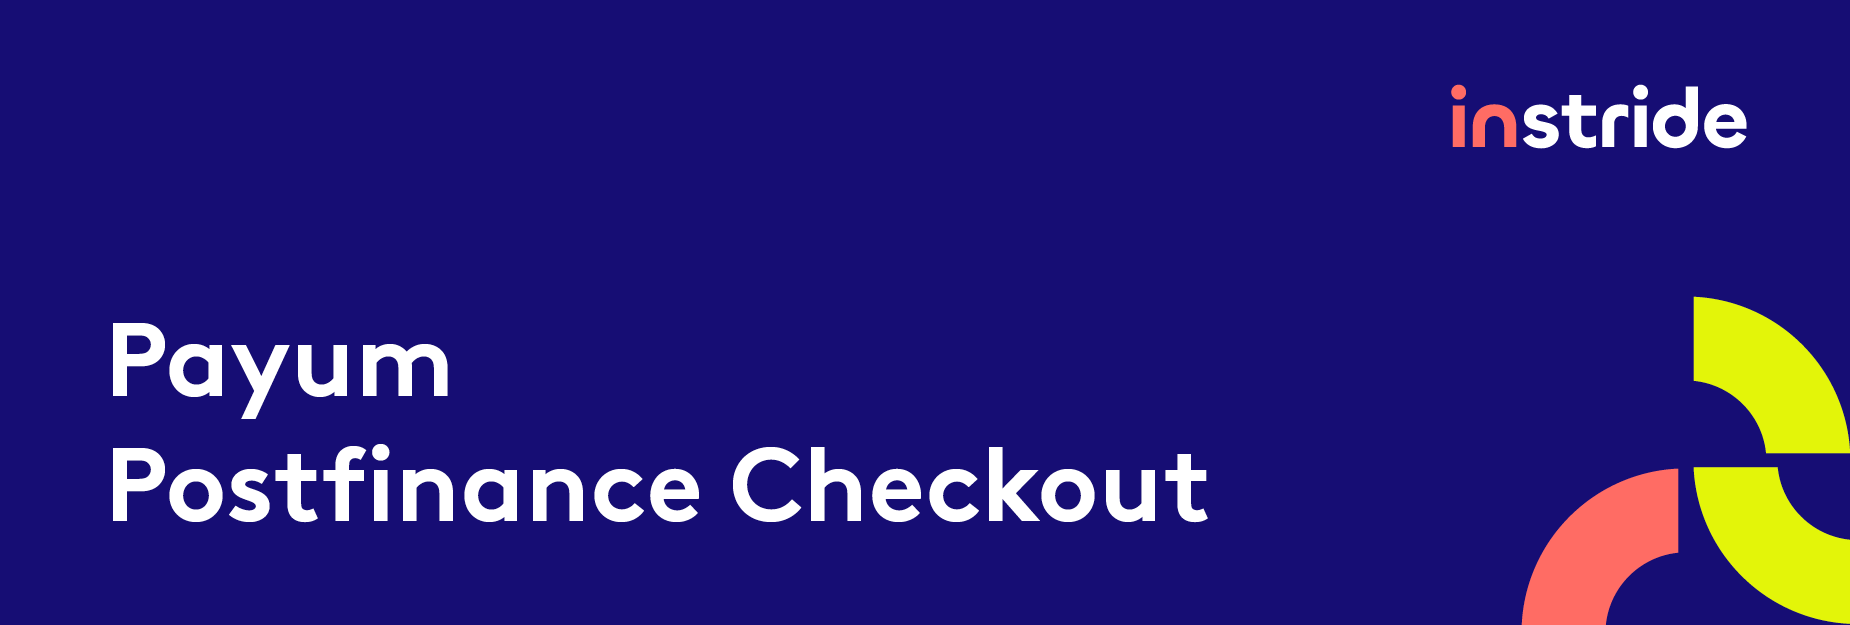 Payum Postfinance Checkout